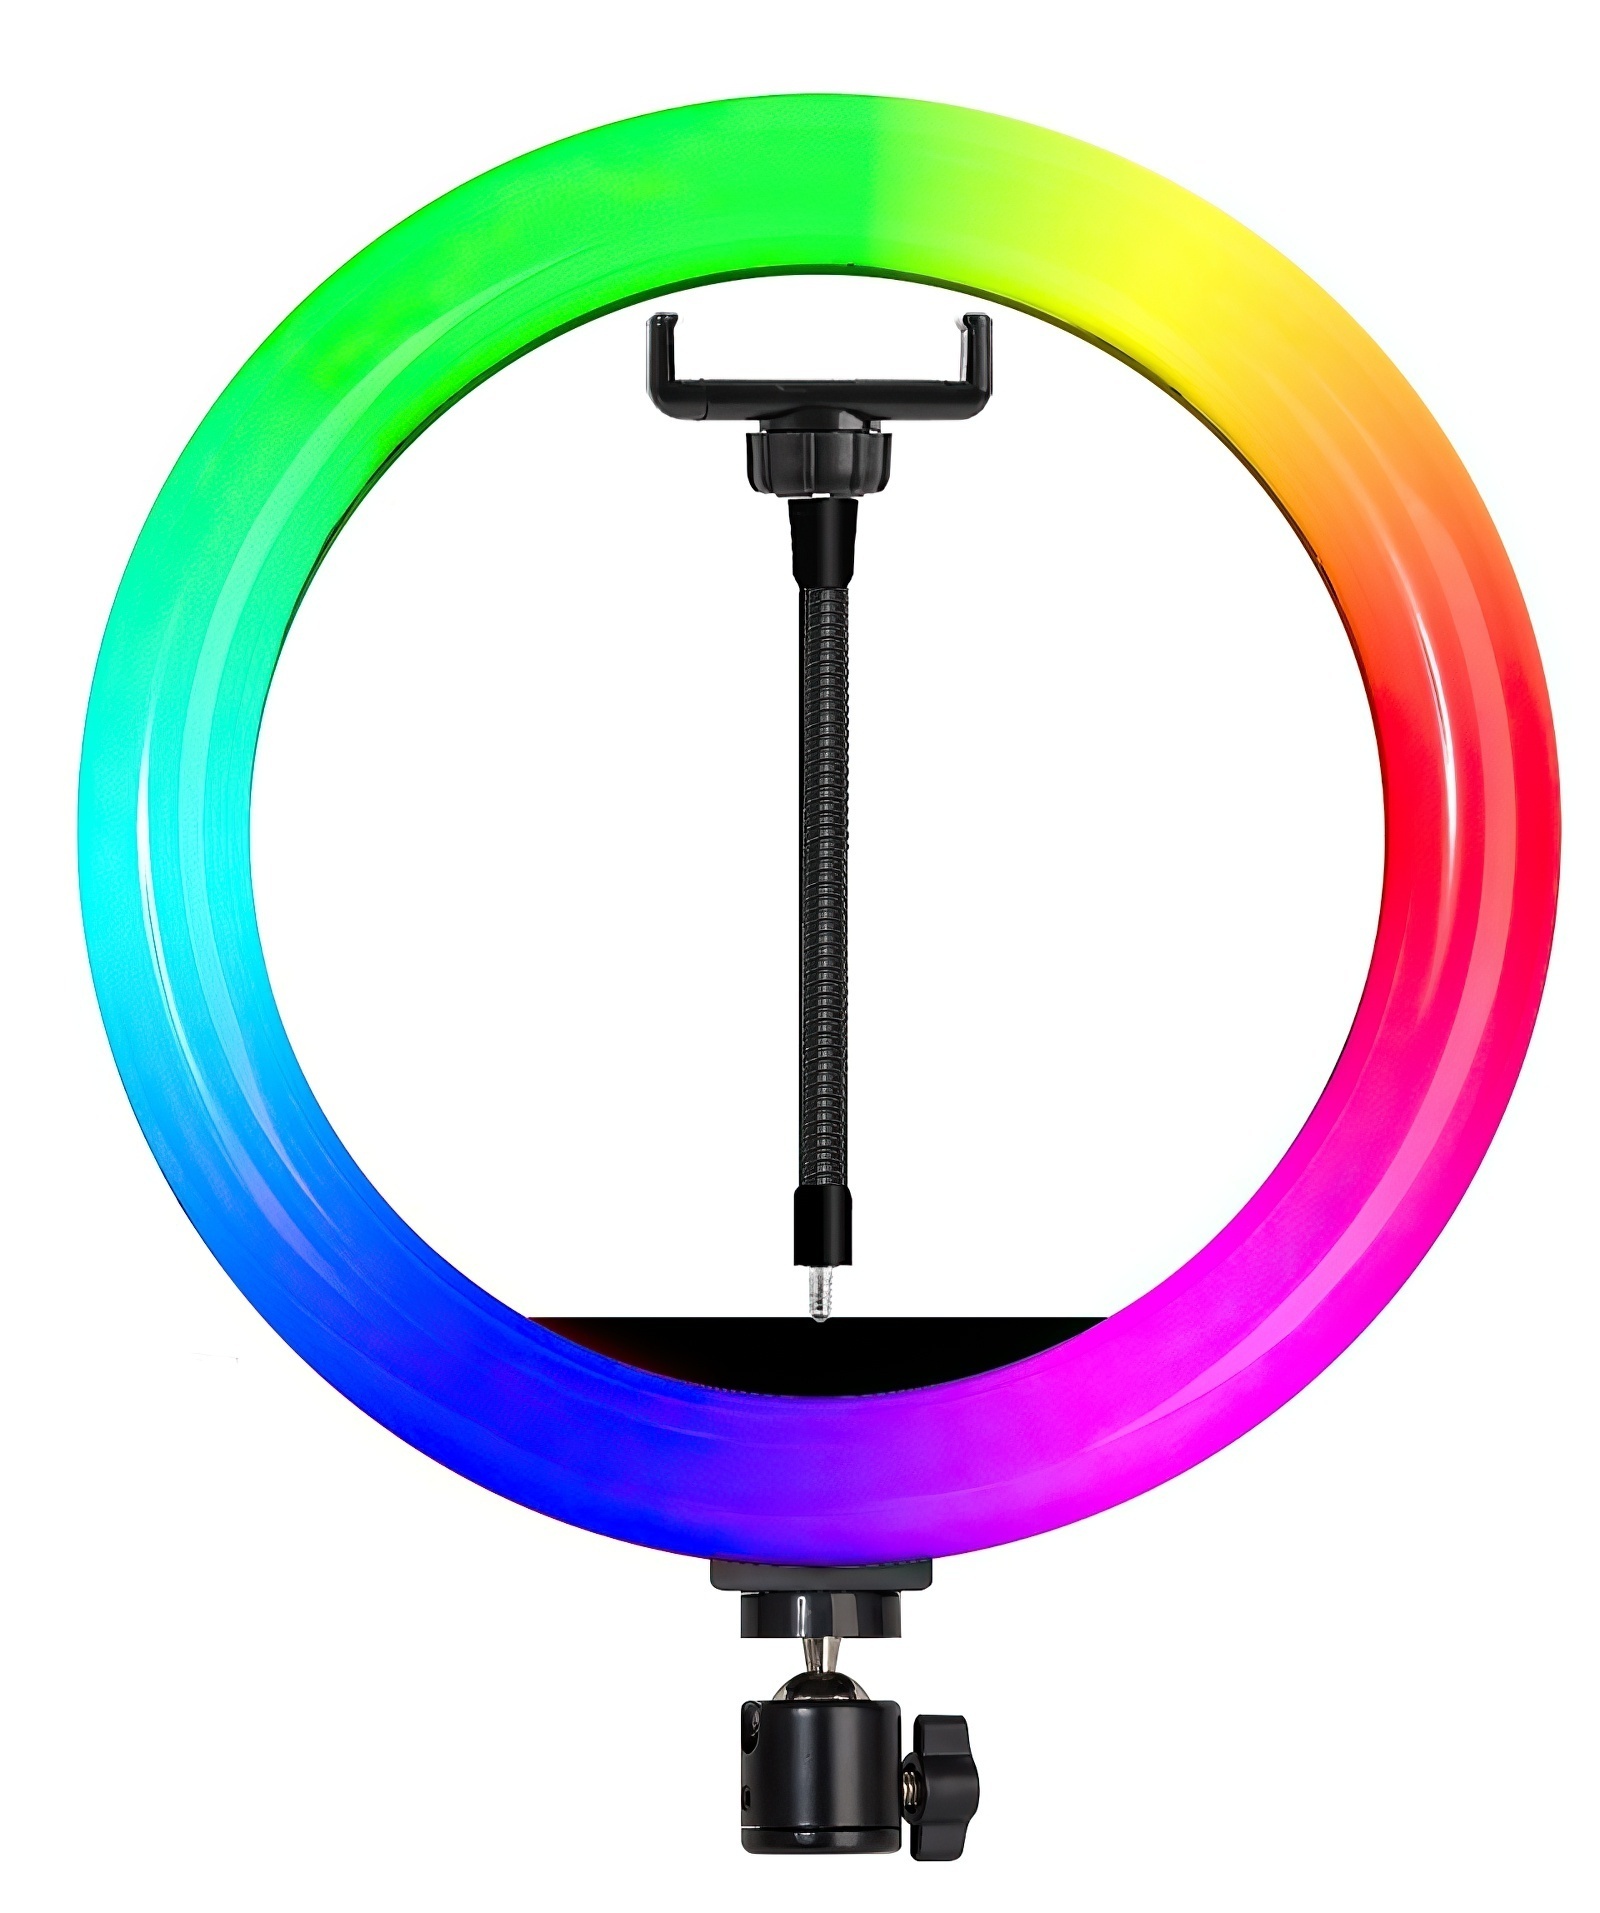 Кольцевая лампа MJ26 RGB LED Soft Ring Light 26cm (без штатива) кольцевая светодиодная лампа для фото видео съемки smartbuy